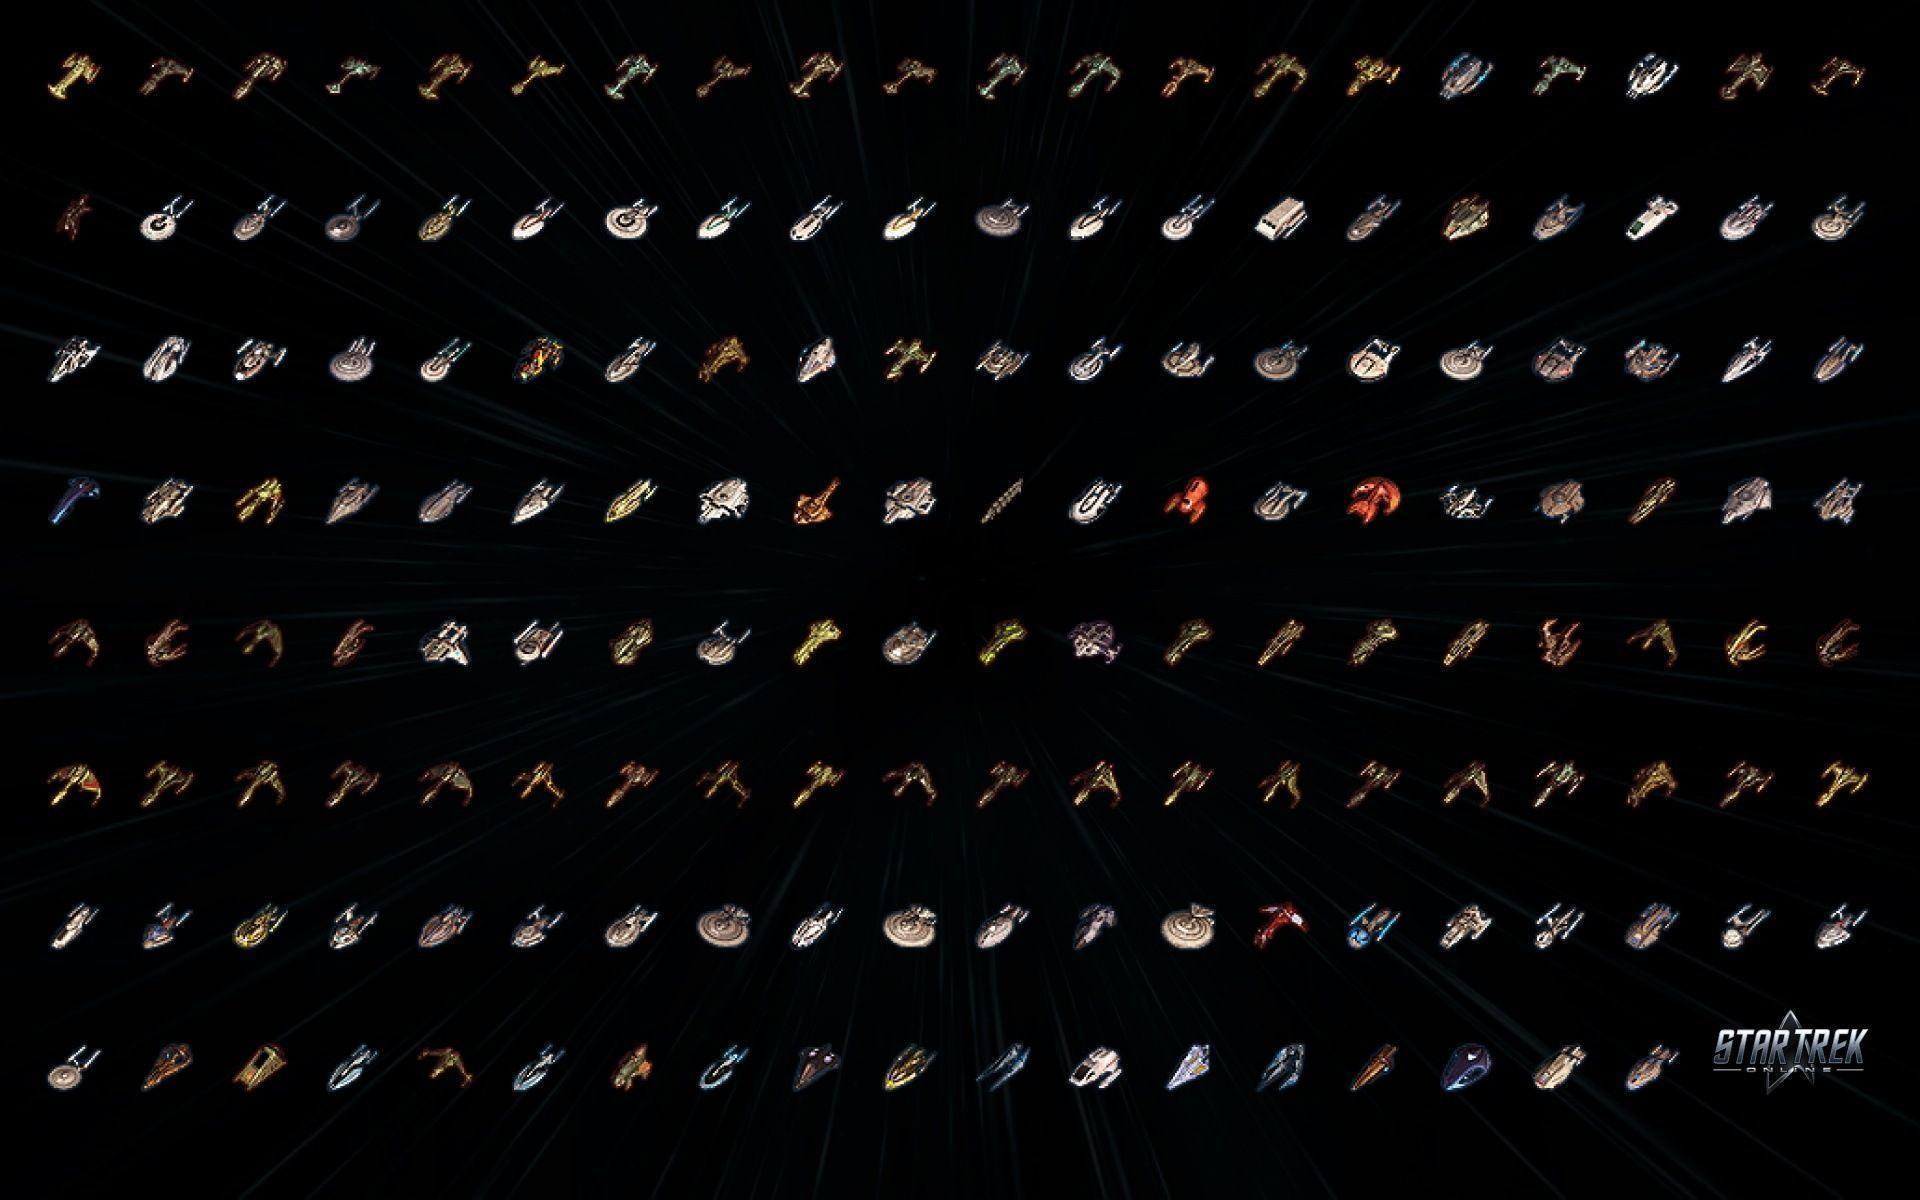 Star Trek Wallpaper HD wallpaper search